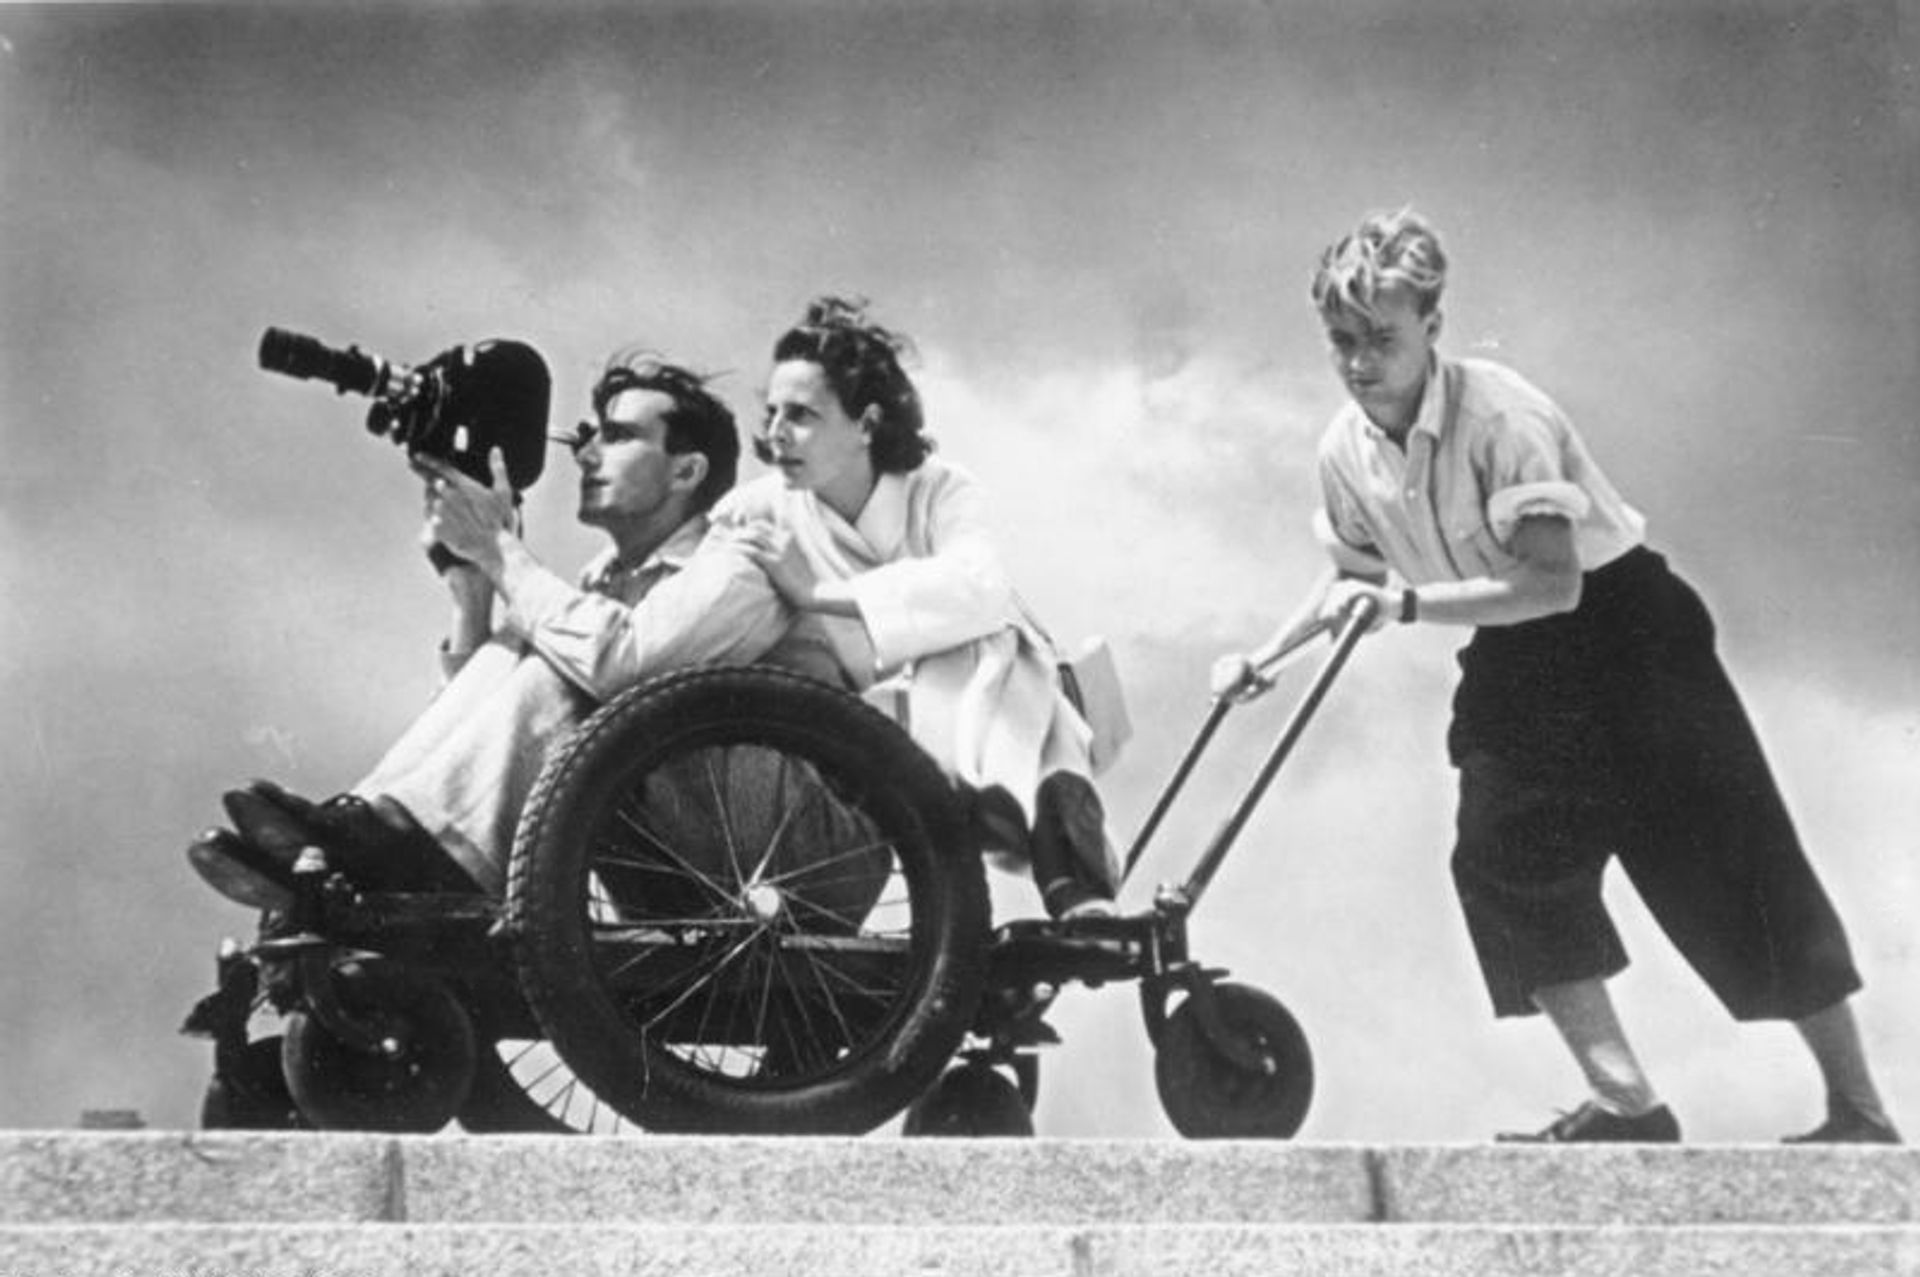 Leni Riefenstahl during filming in 1936 Bundesarchiv, Bild 146-1988-106-29 / CC-BY-SA 3.0